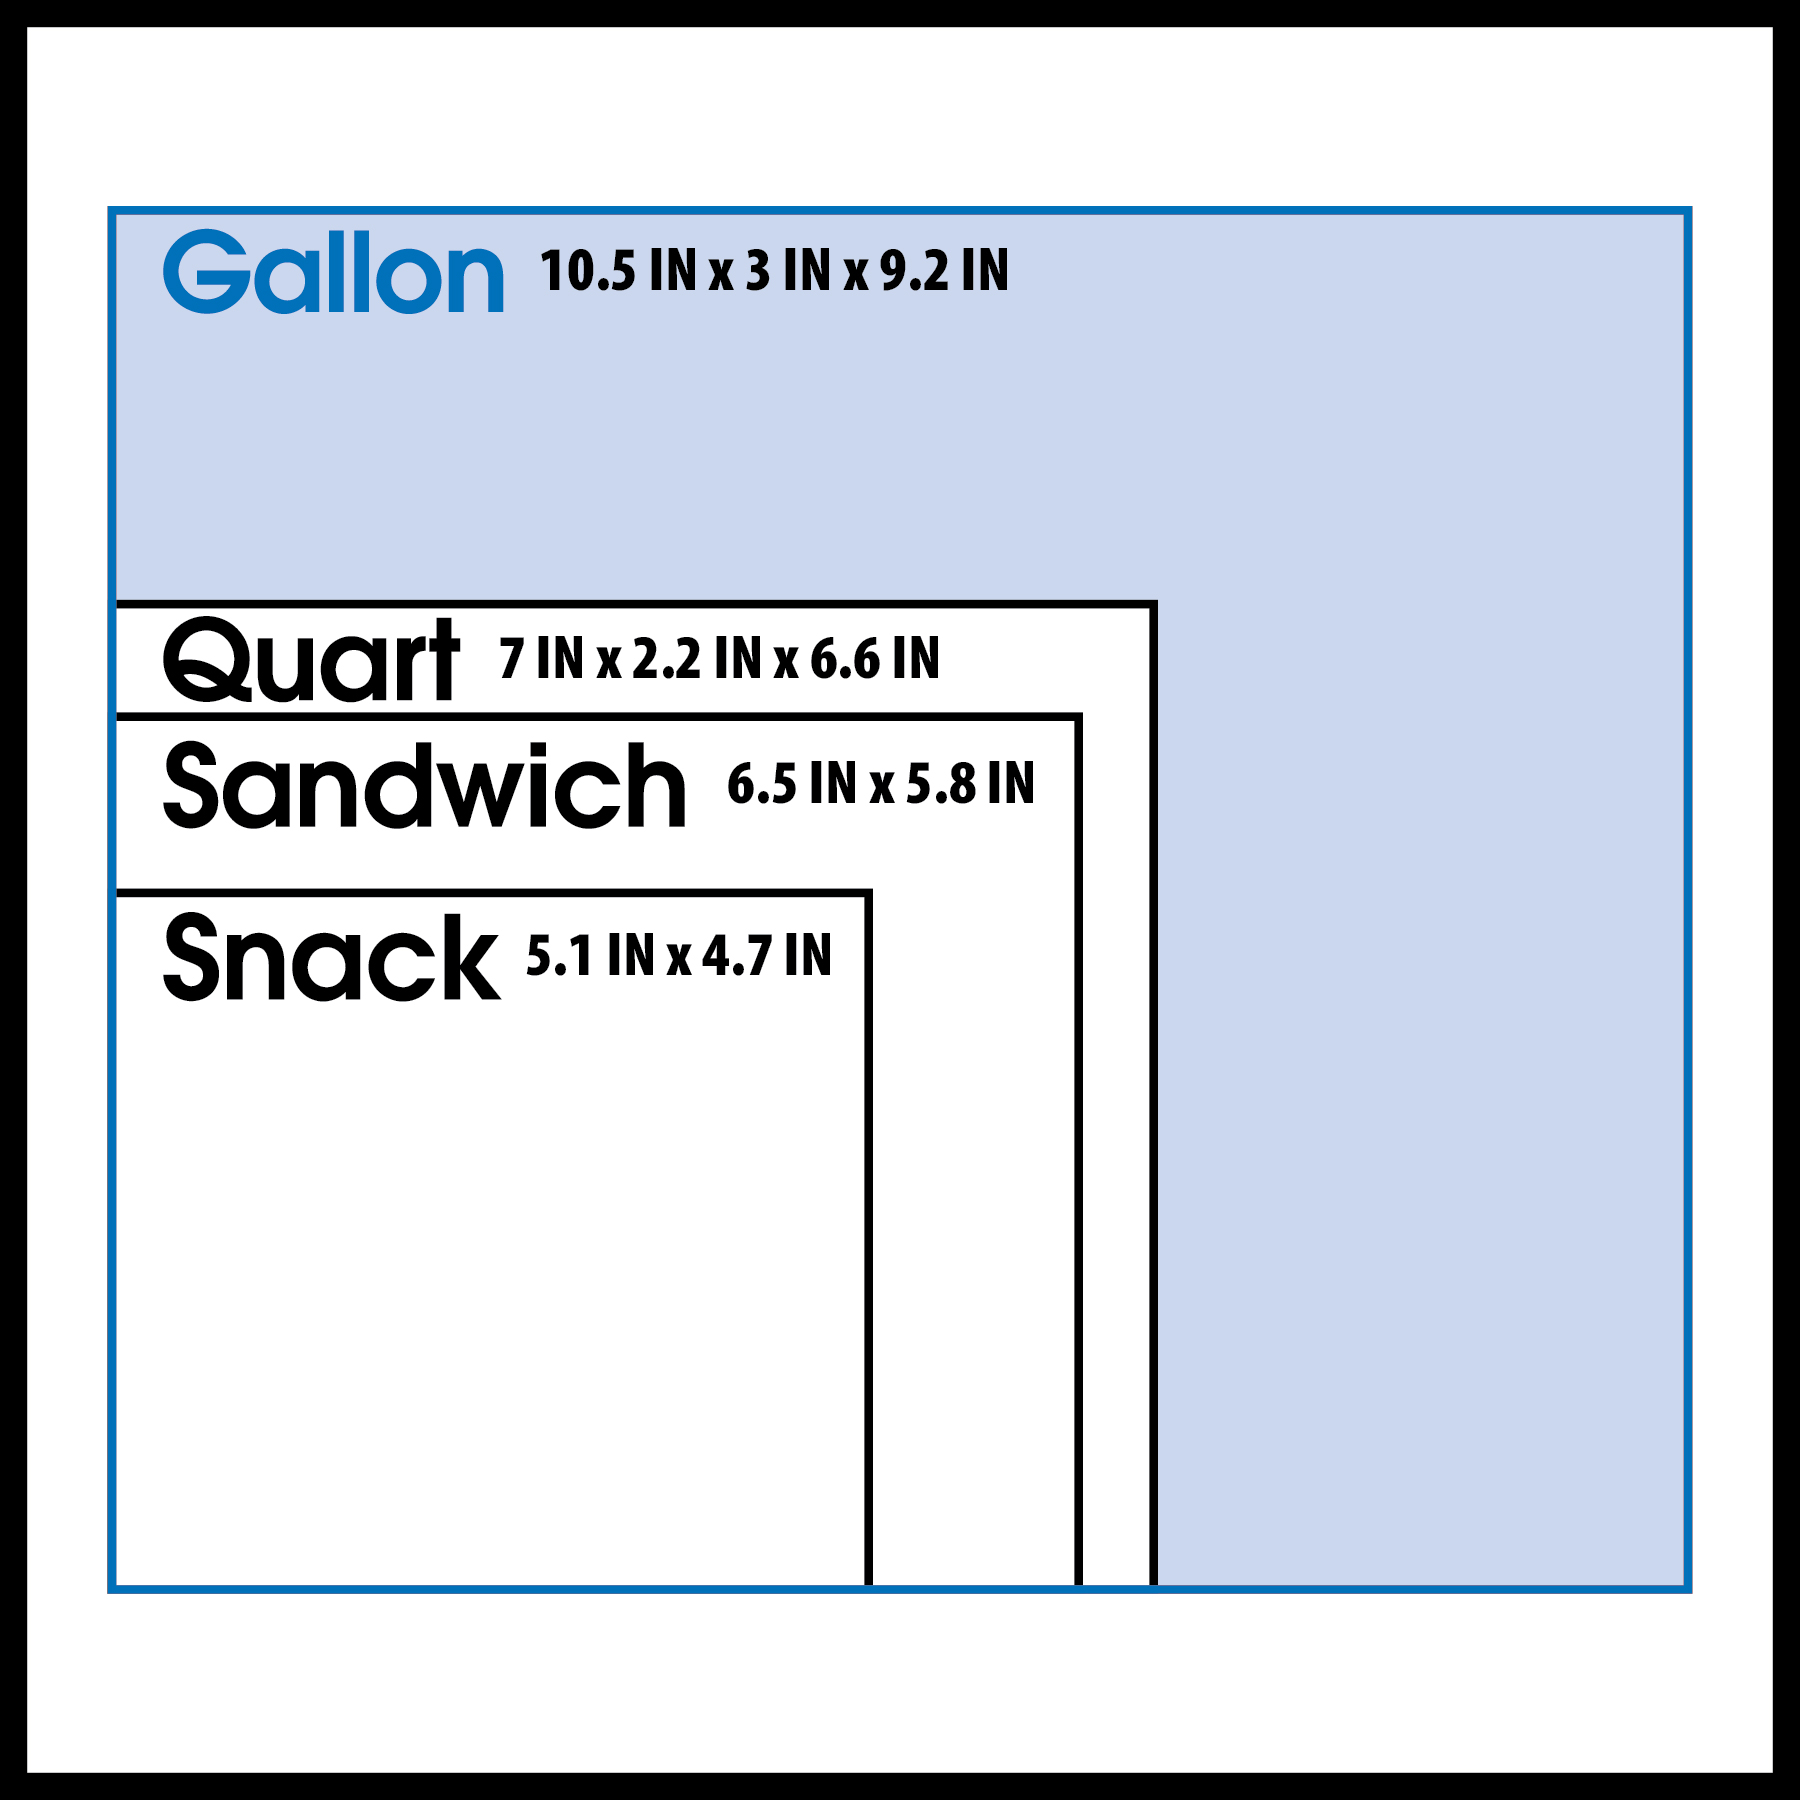 Great Value Freezer Guard Slider Zipper Bags, Gallon Freezer, 40 Count - image 4 of 6